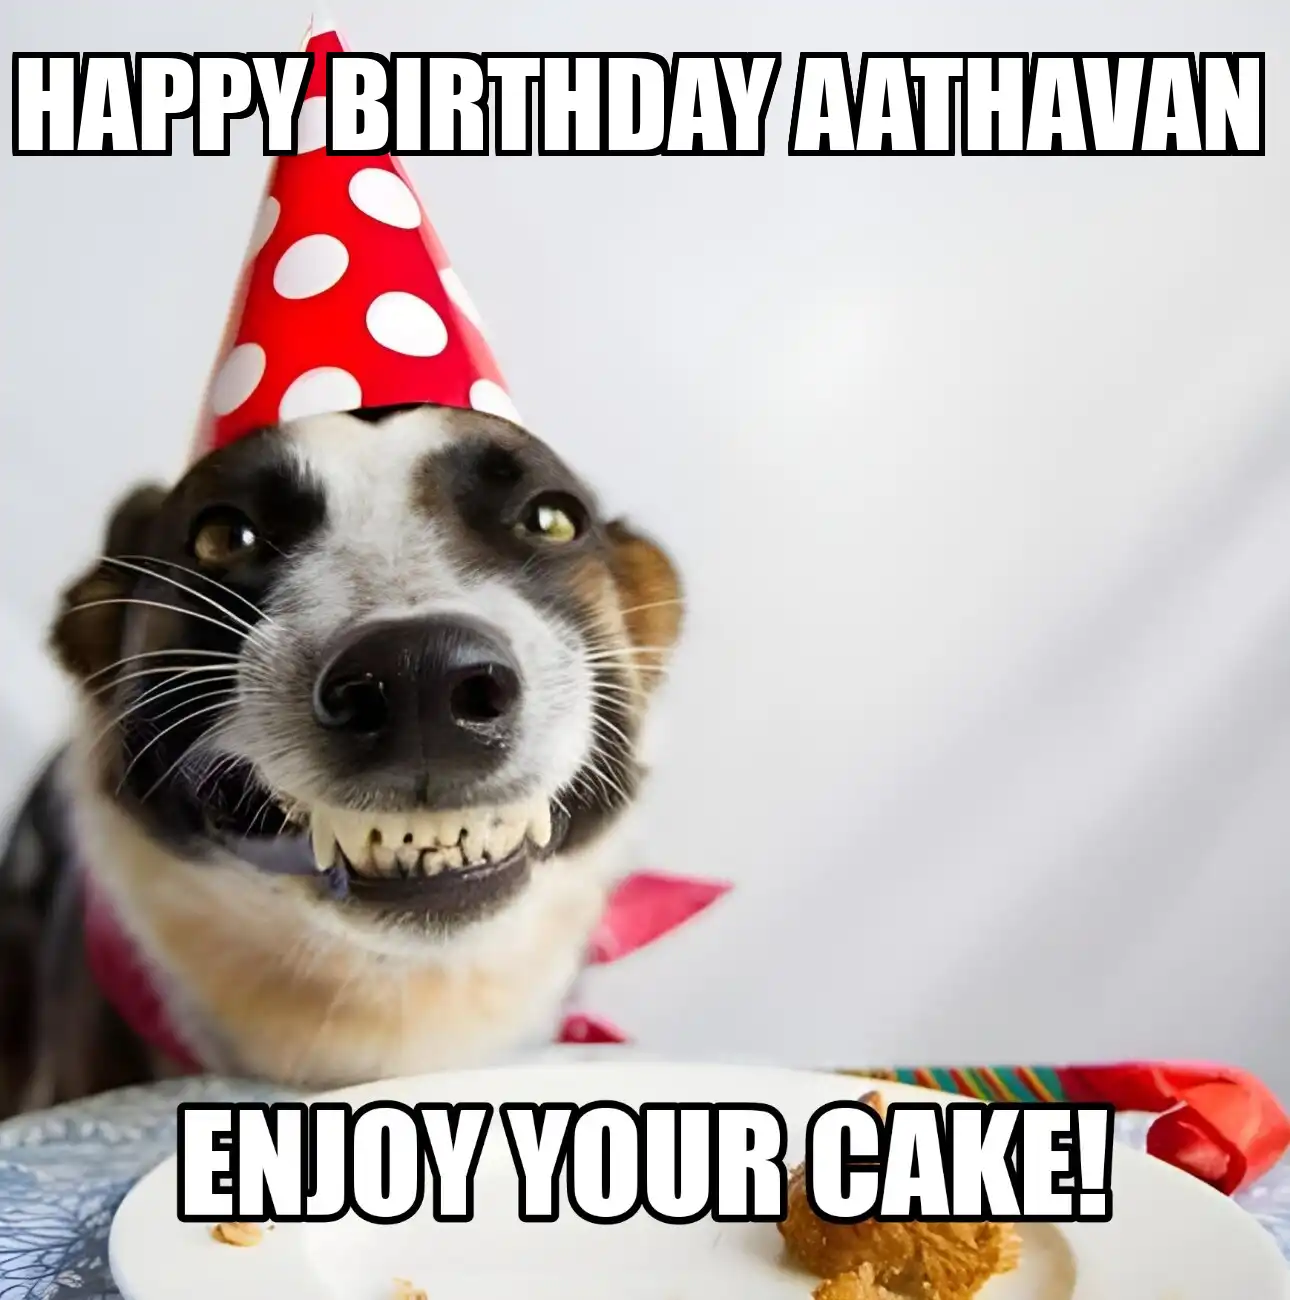 Happy Birthday Aathavan Enjoy Your Cake Dog Meme